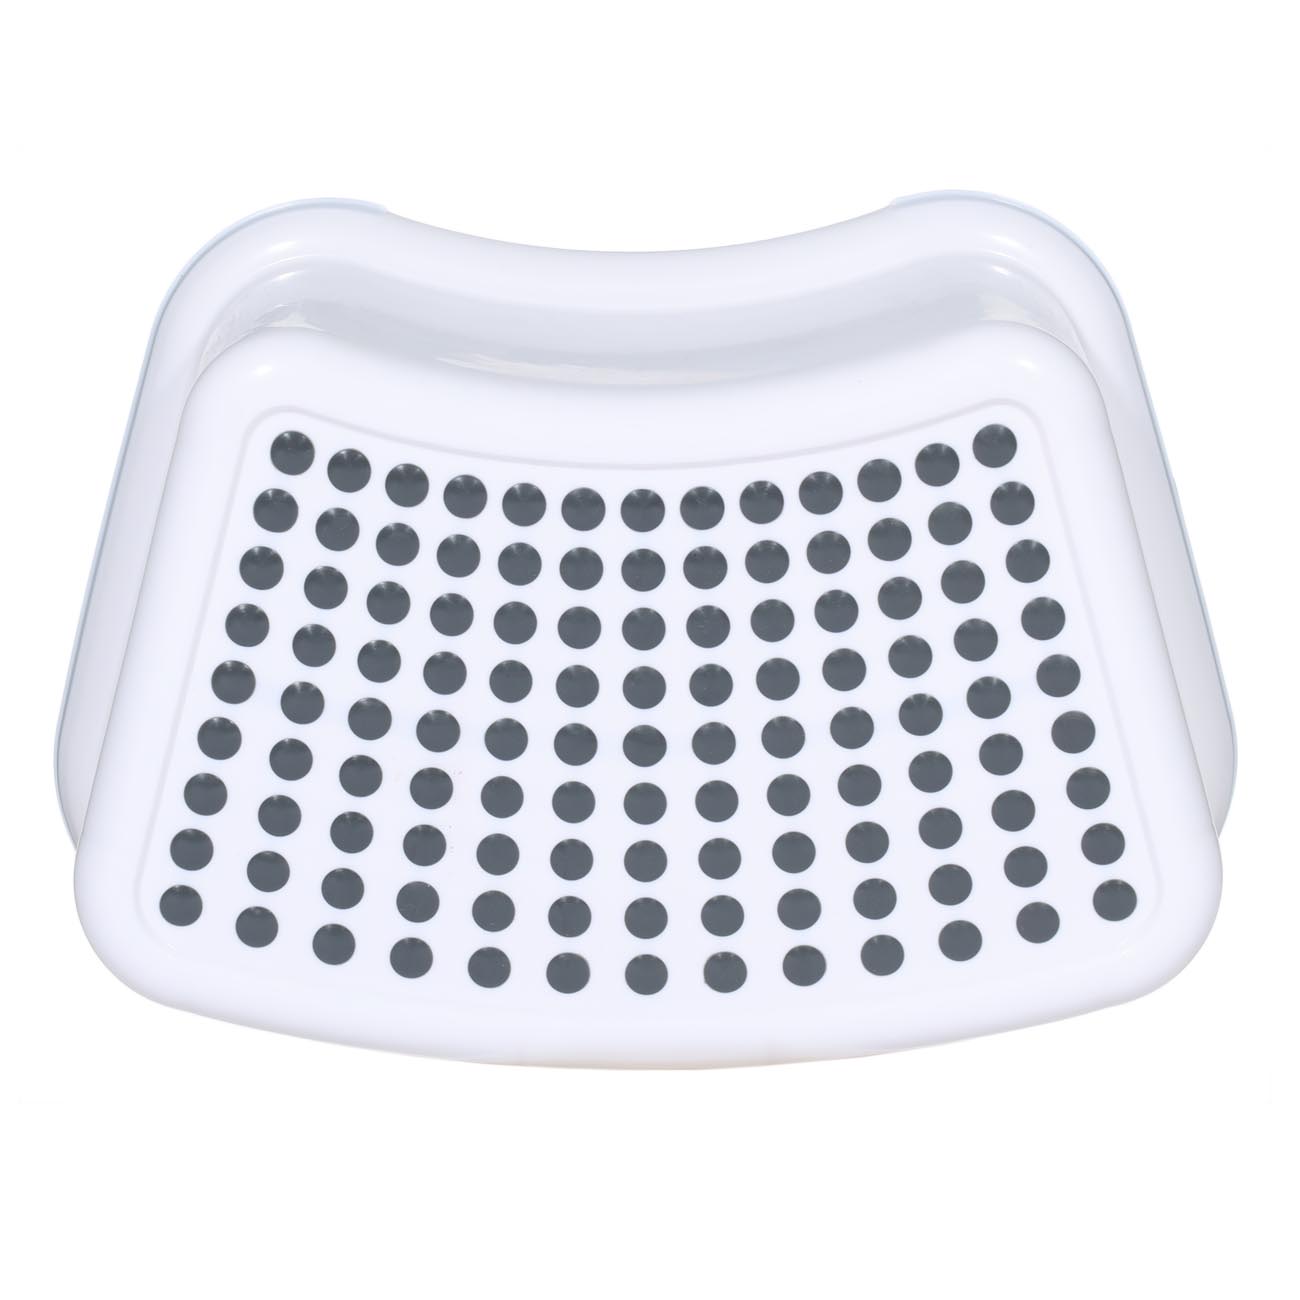 Табурет-подставка, 24х36 см, пластик/резина, бело-серый, Polka dot изображение № 2